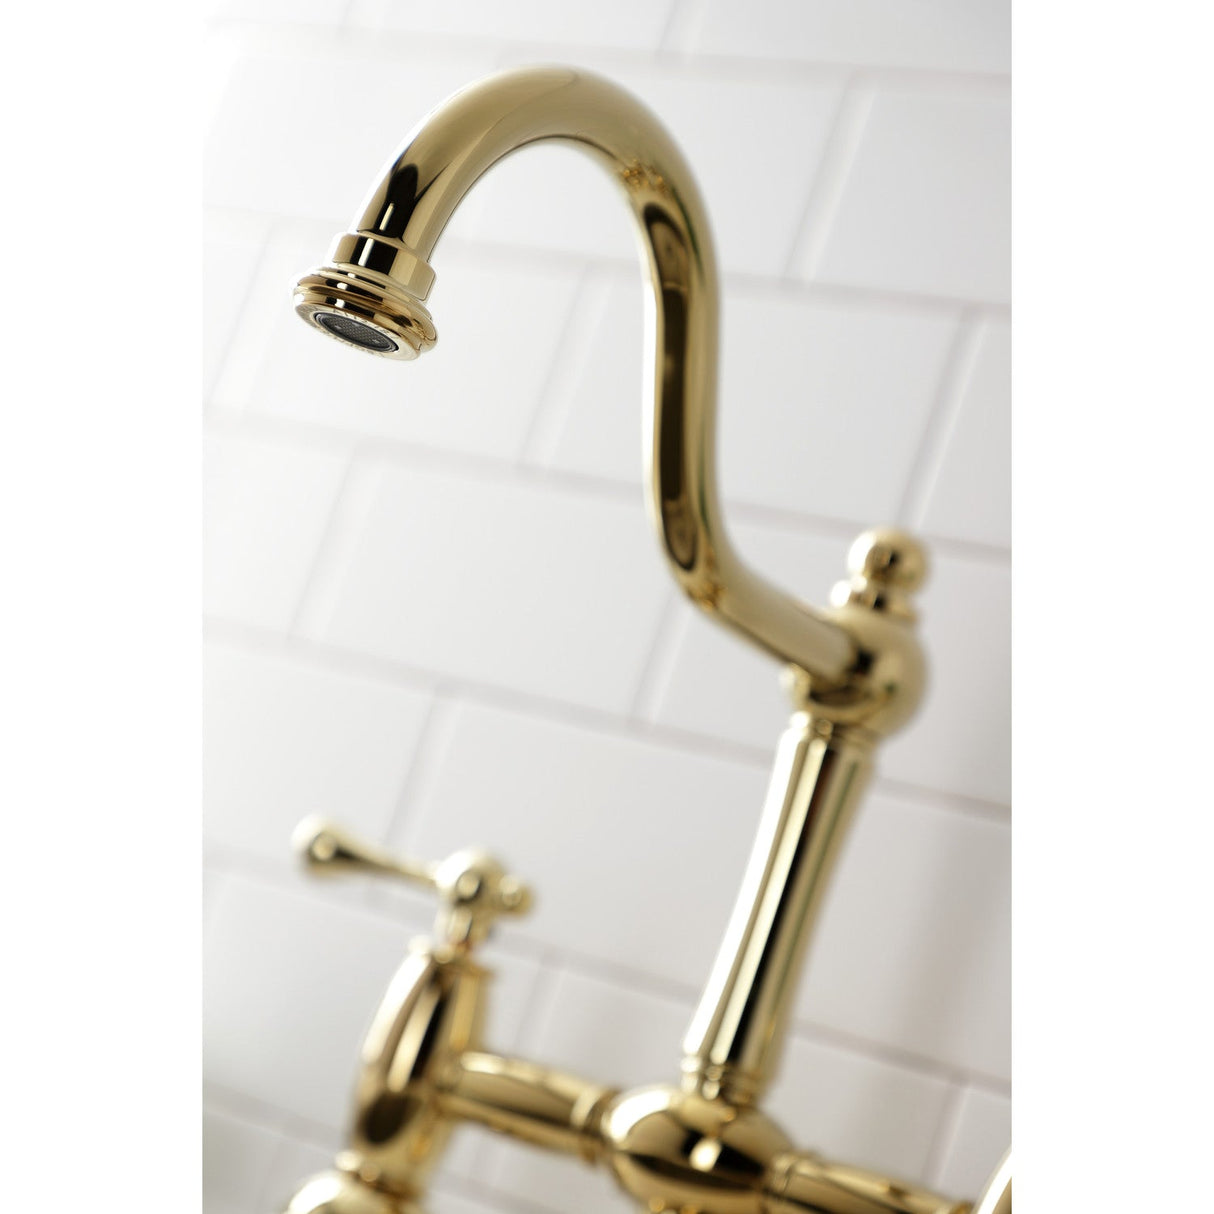 Restoration KS3792BLBS Two-Handle 4-Hole Deck Mount Bridge Kitchen Faucet with Brass Sprayer, Polished Brass